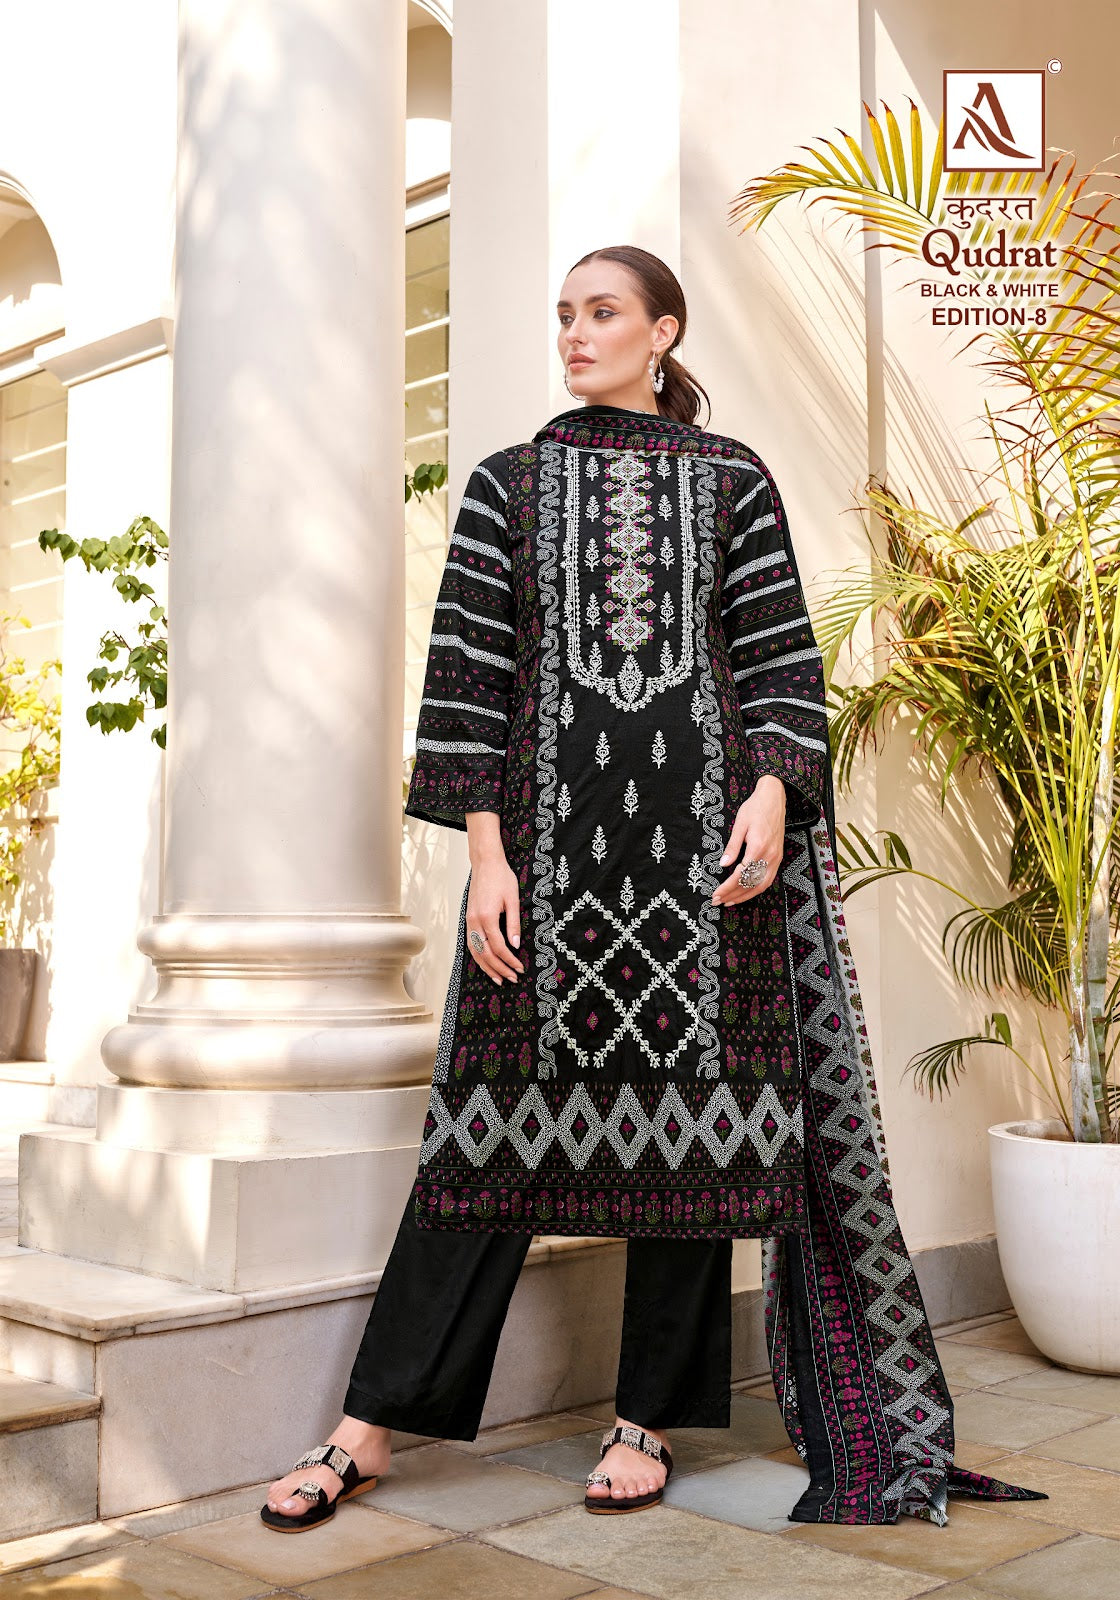 Qudrat Black And White Edition 8 Alok Cambric Cotton Karachi Salwar Suits Exporter Ahmedabad